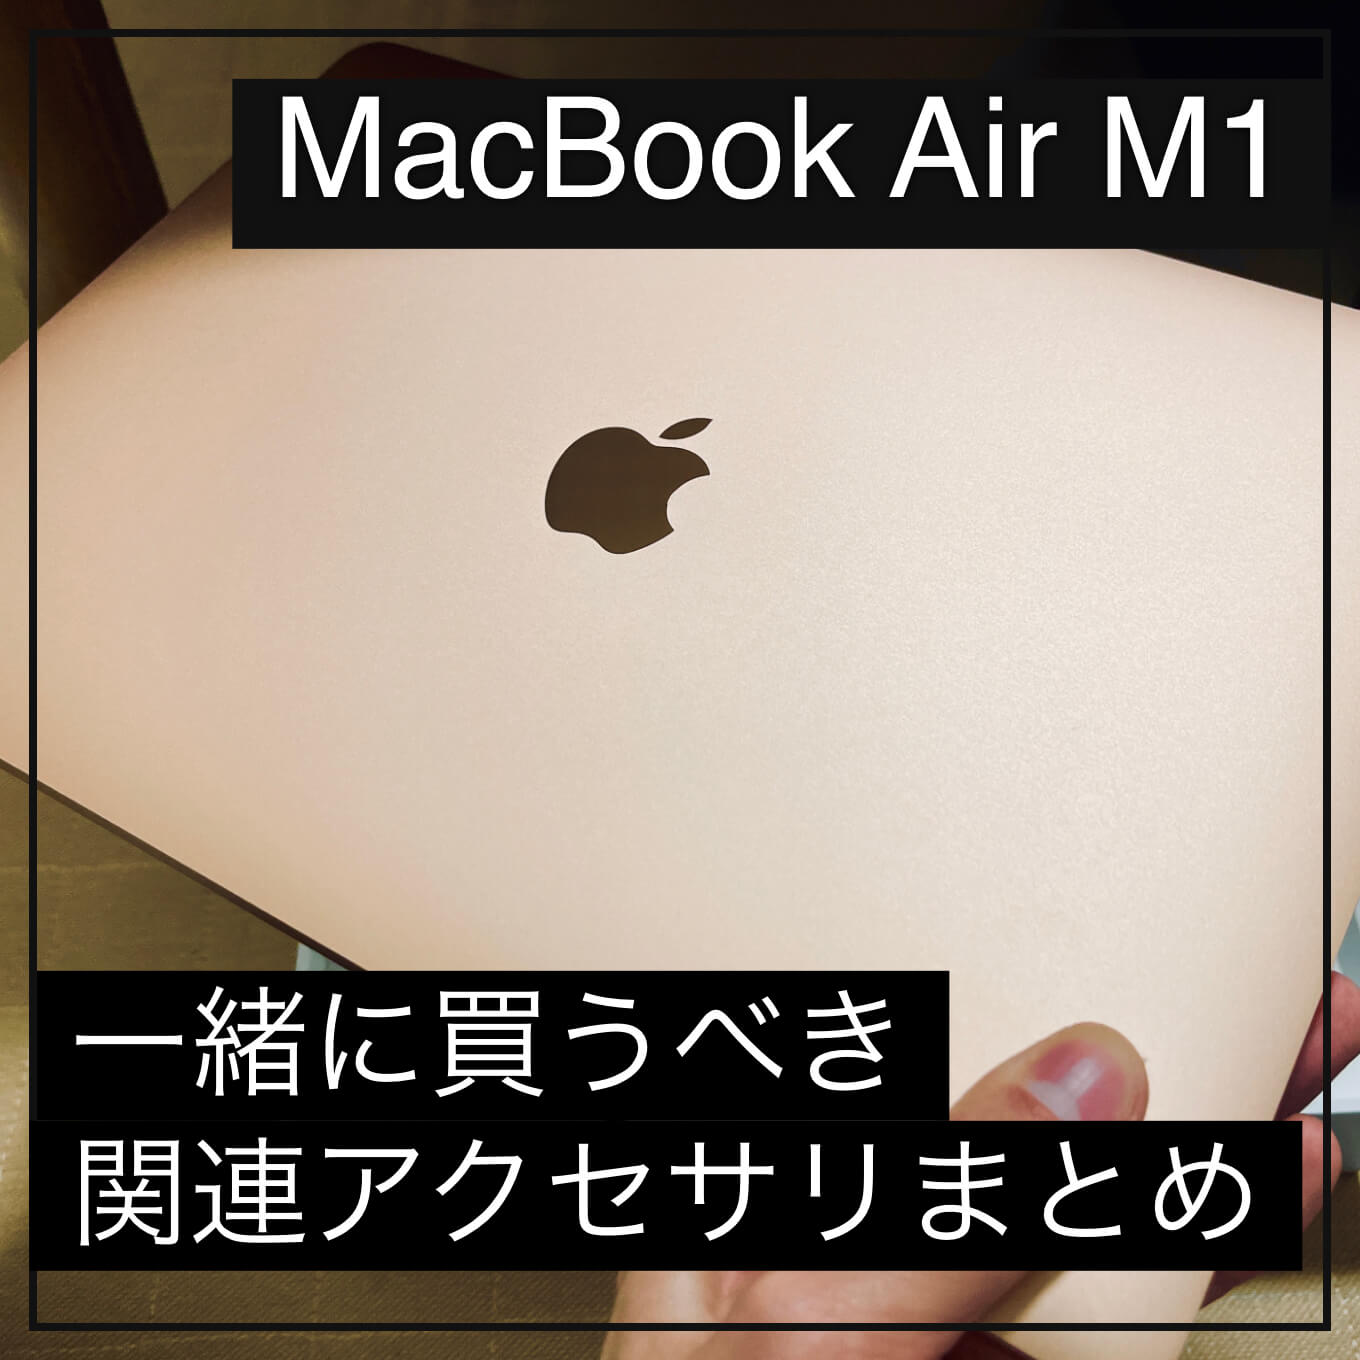 MacBook Air M1と同時に買いたい周辺アクセサリーやガジェット